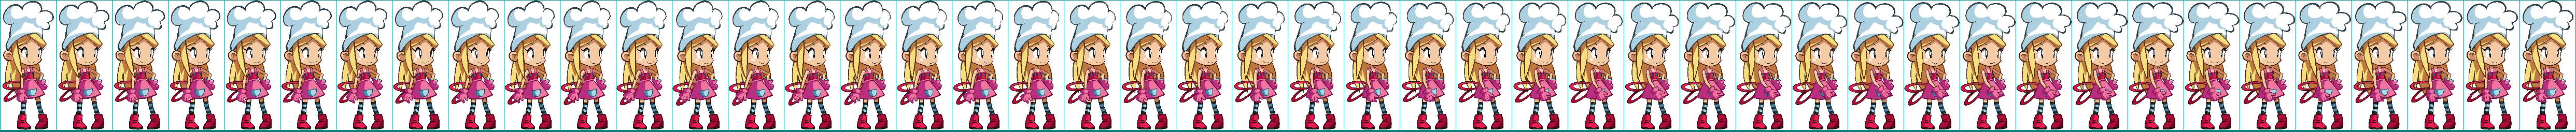 Shantae: Half-Genie Hero - Chef